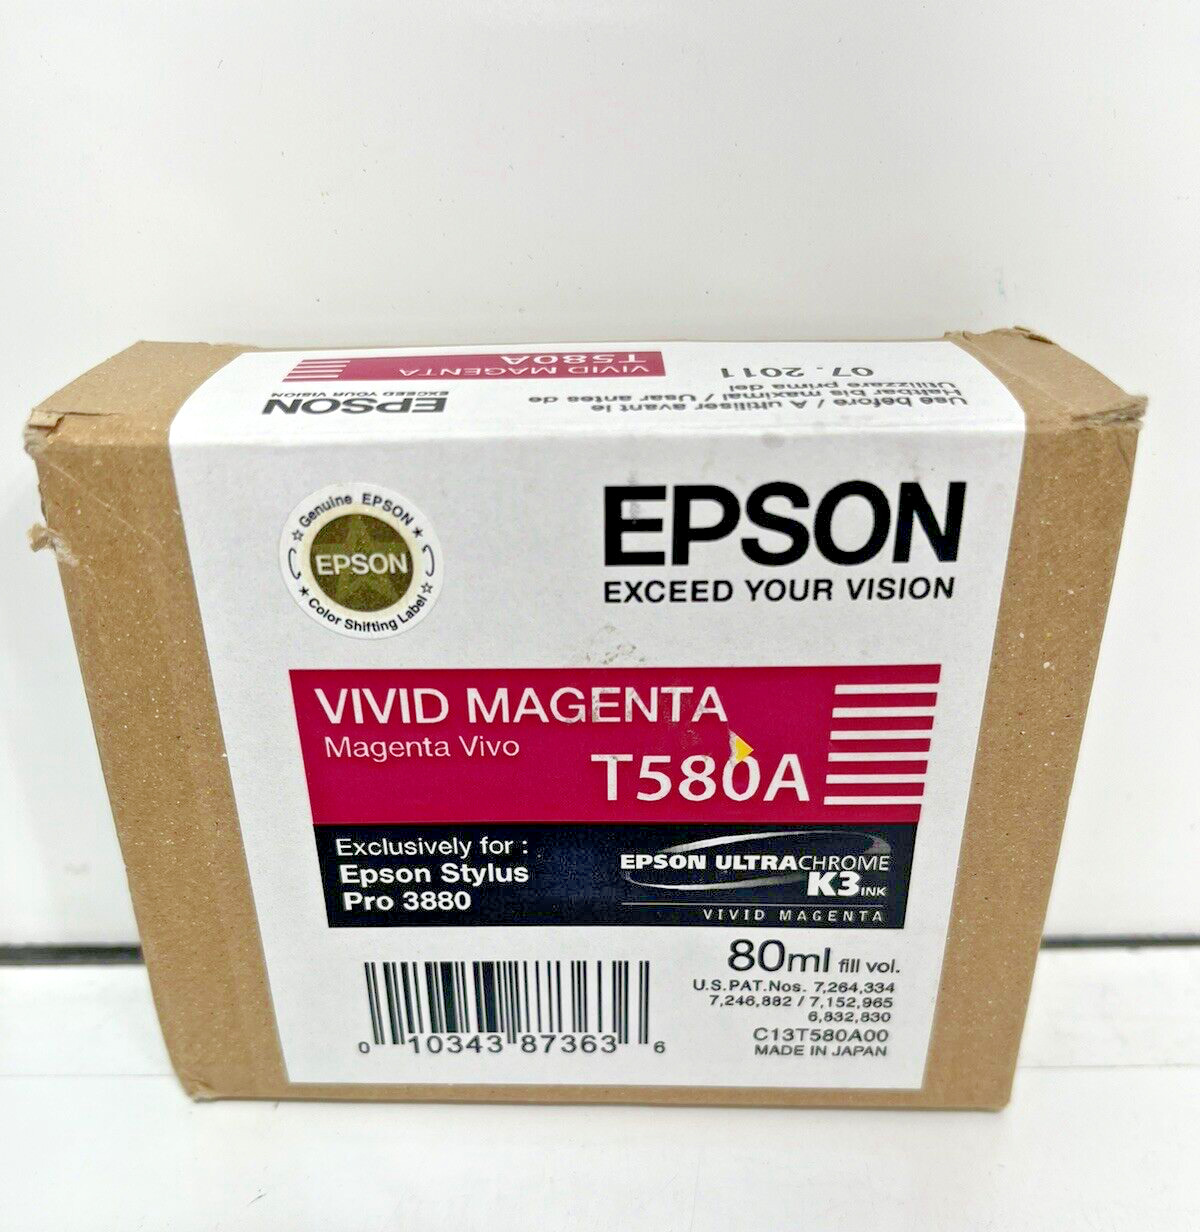 EXPIRED 2011 - Genuine Epson Ink Pro 3880 New T580A Vivid Magenta Sealed